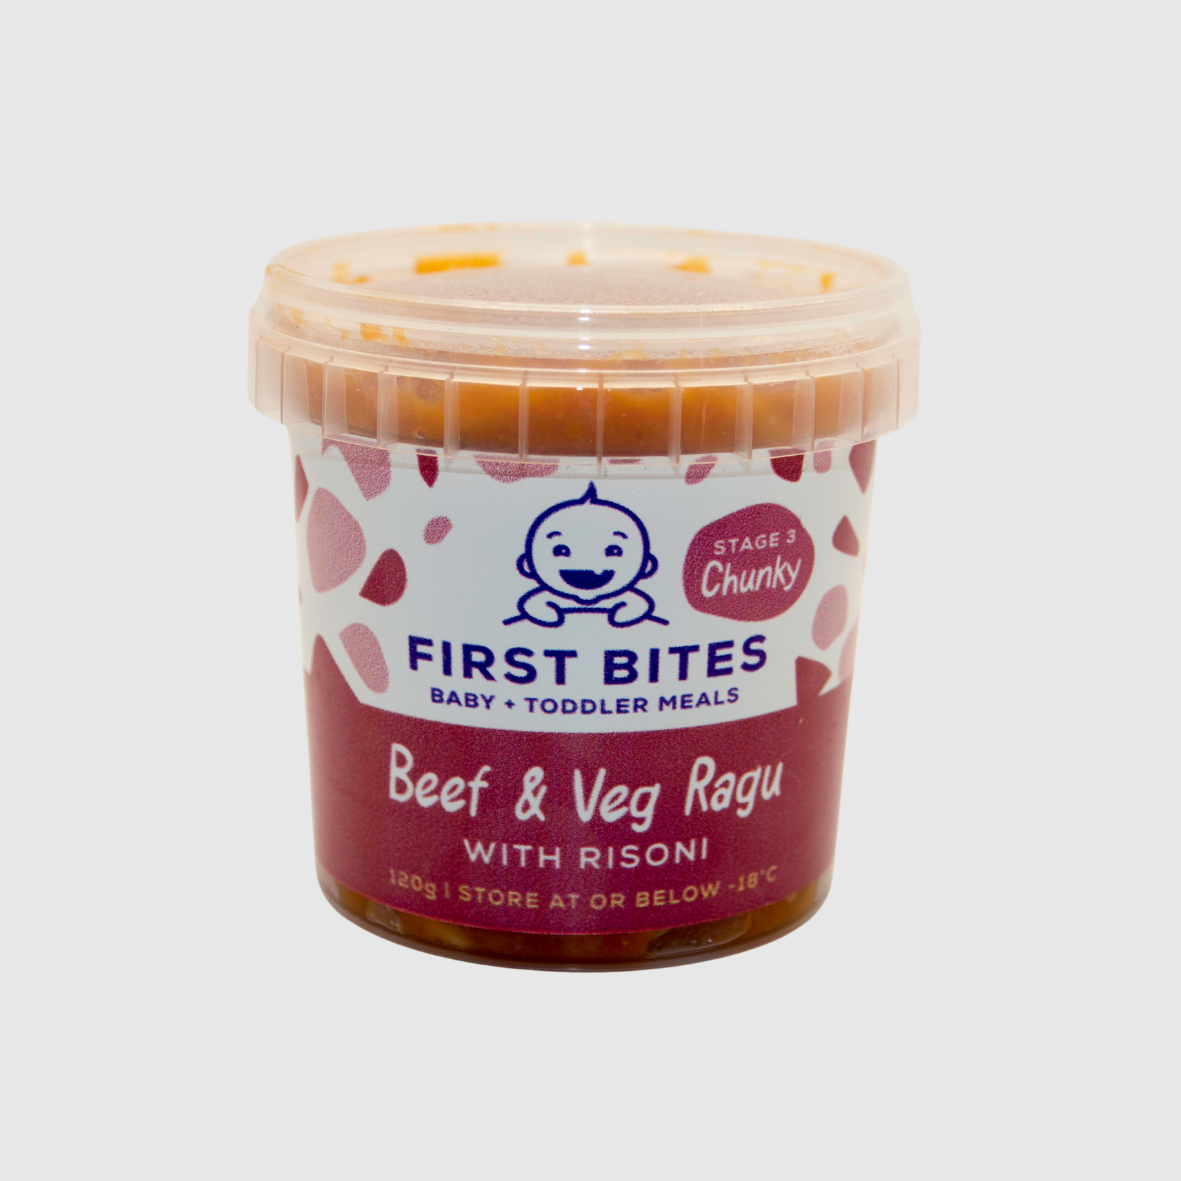 First Bites Baby Food - Beef & Veg Ragu with Risoni